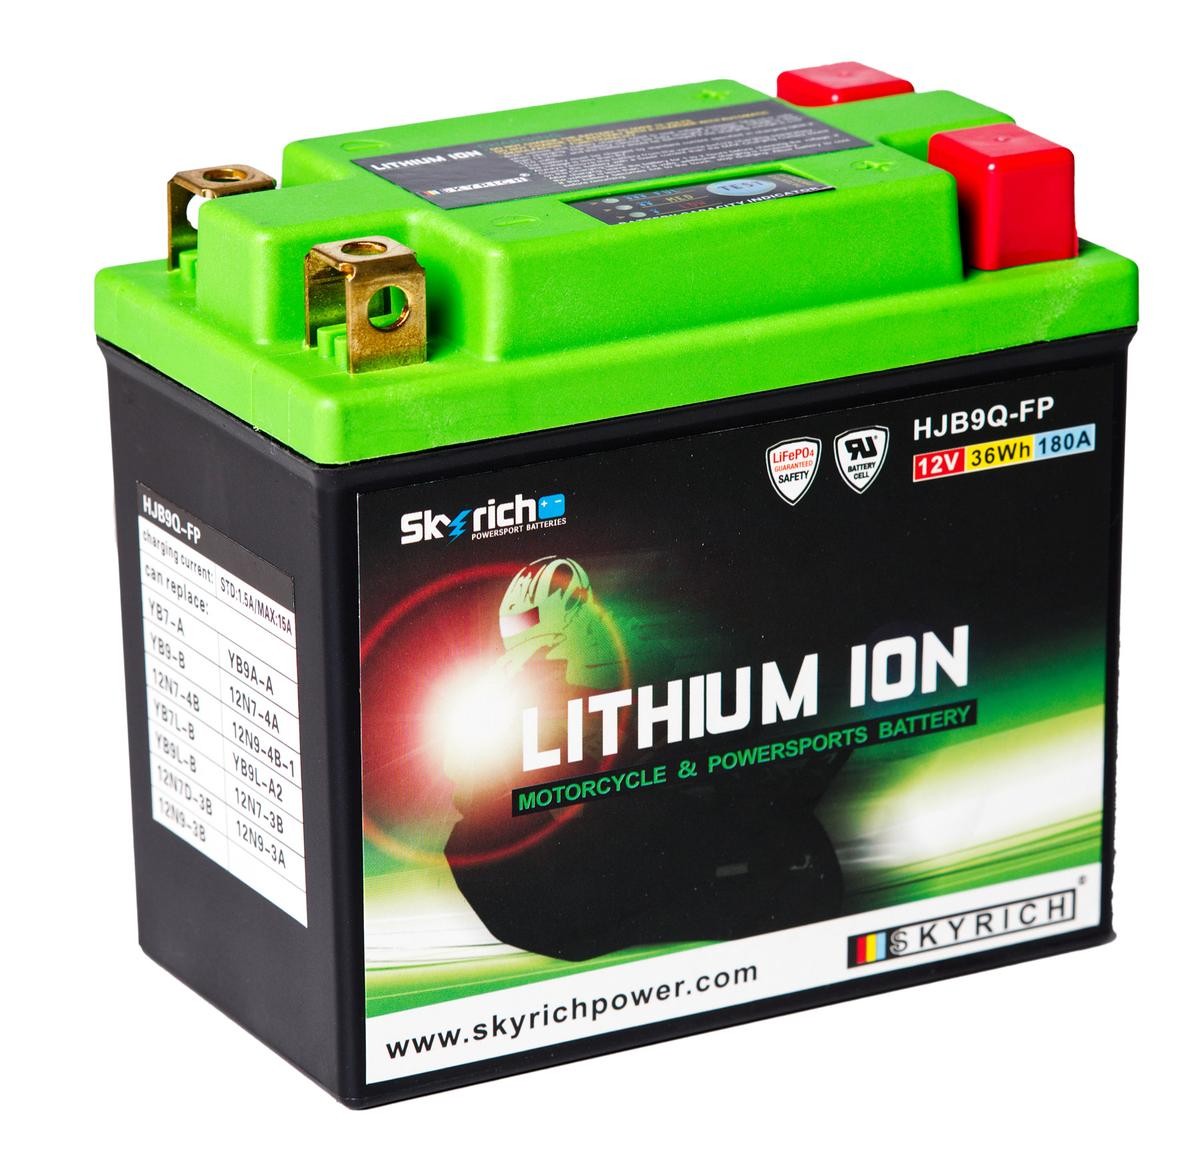 YAMAHA RD Batterie 12V 3Ah 180A N Li-Ionen-Batterie SKYRICH LITHIUM ION HJB9Q-FP